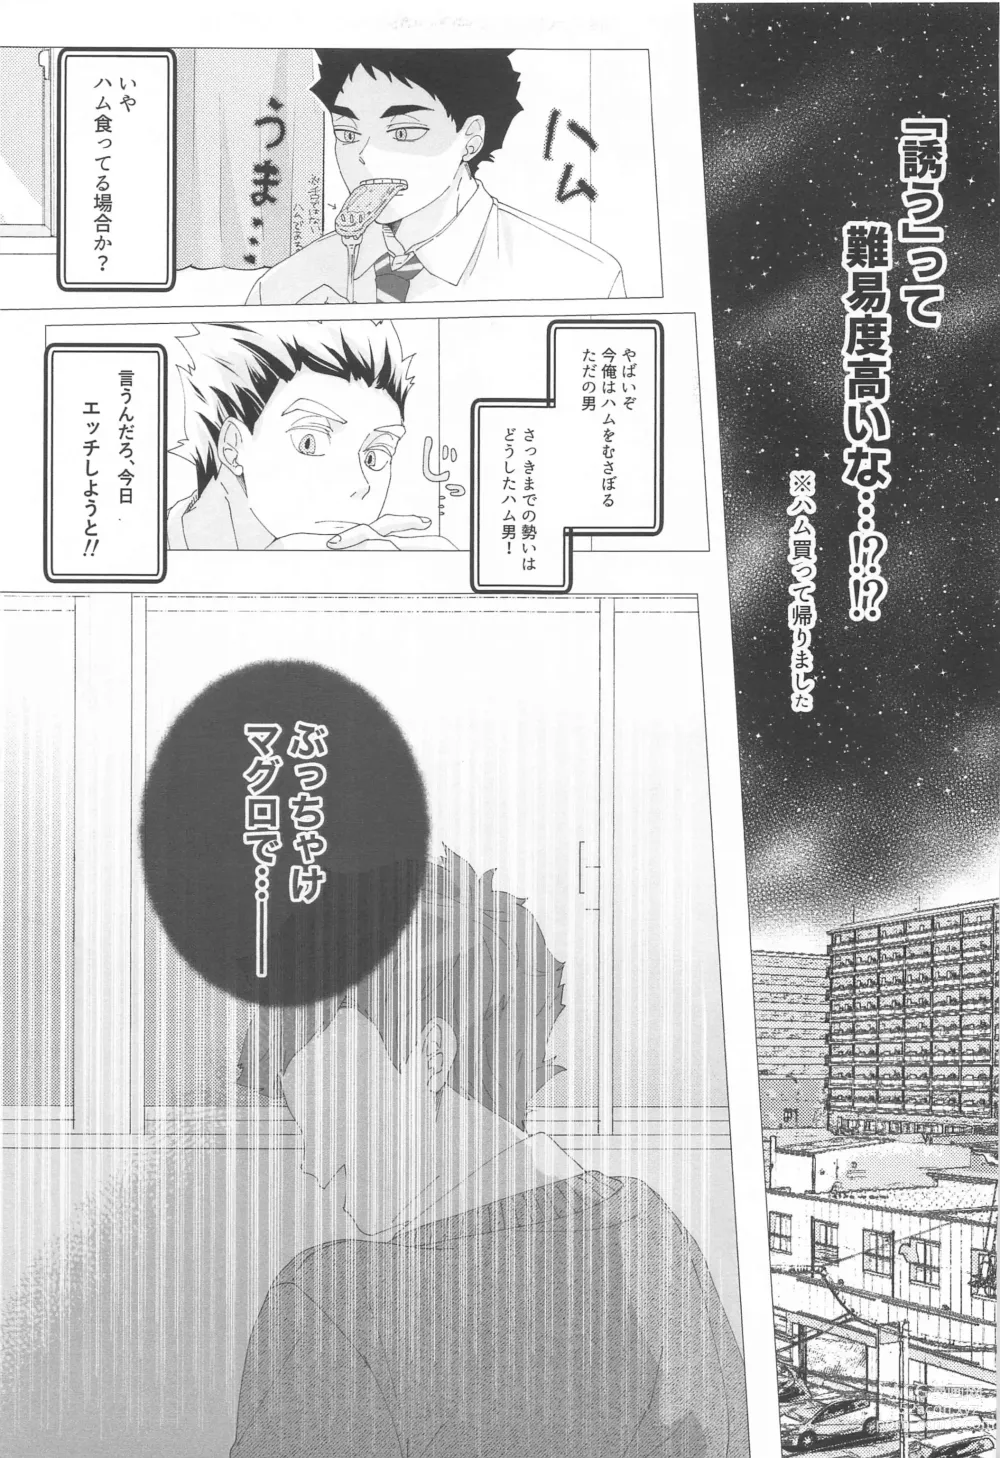 Page 14 of doujinshi Magarinari ni mo Koibito nanode